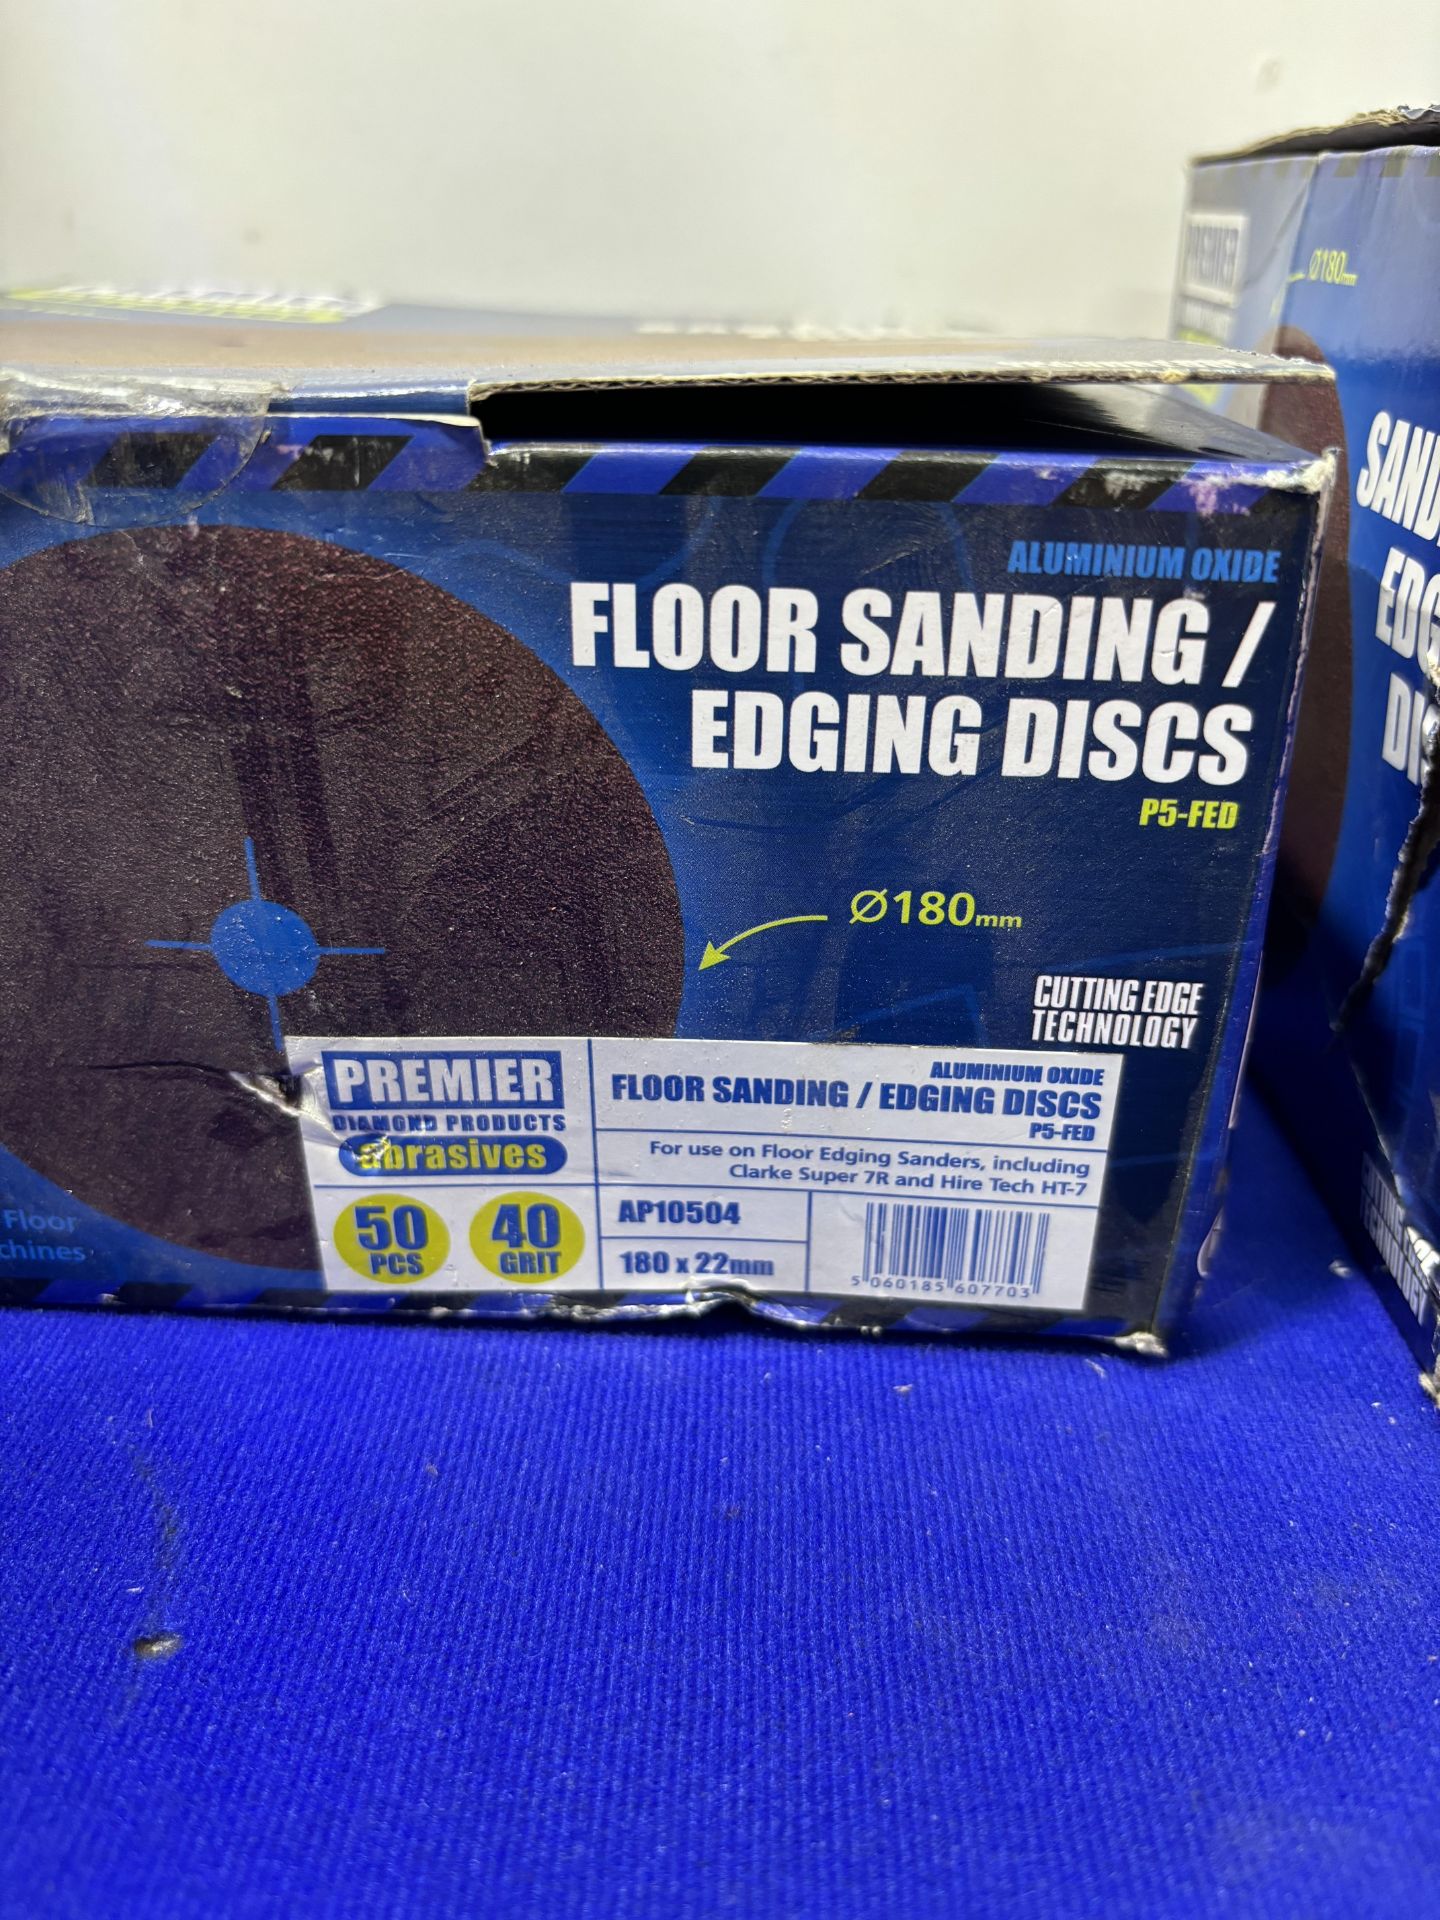 150 x Various Premier P5-FED Floor Sanding/Edging Discs - Image 2 of 4